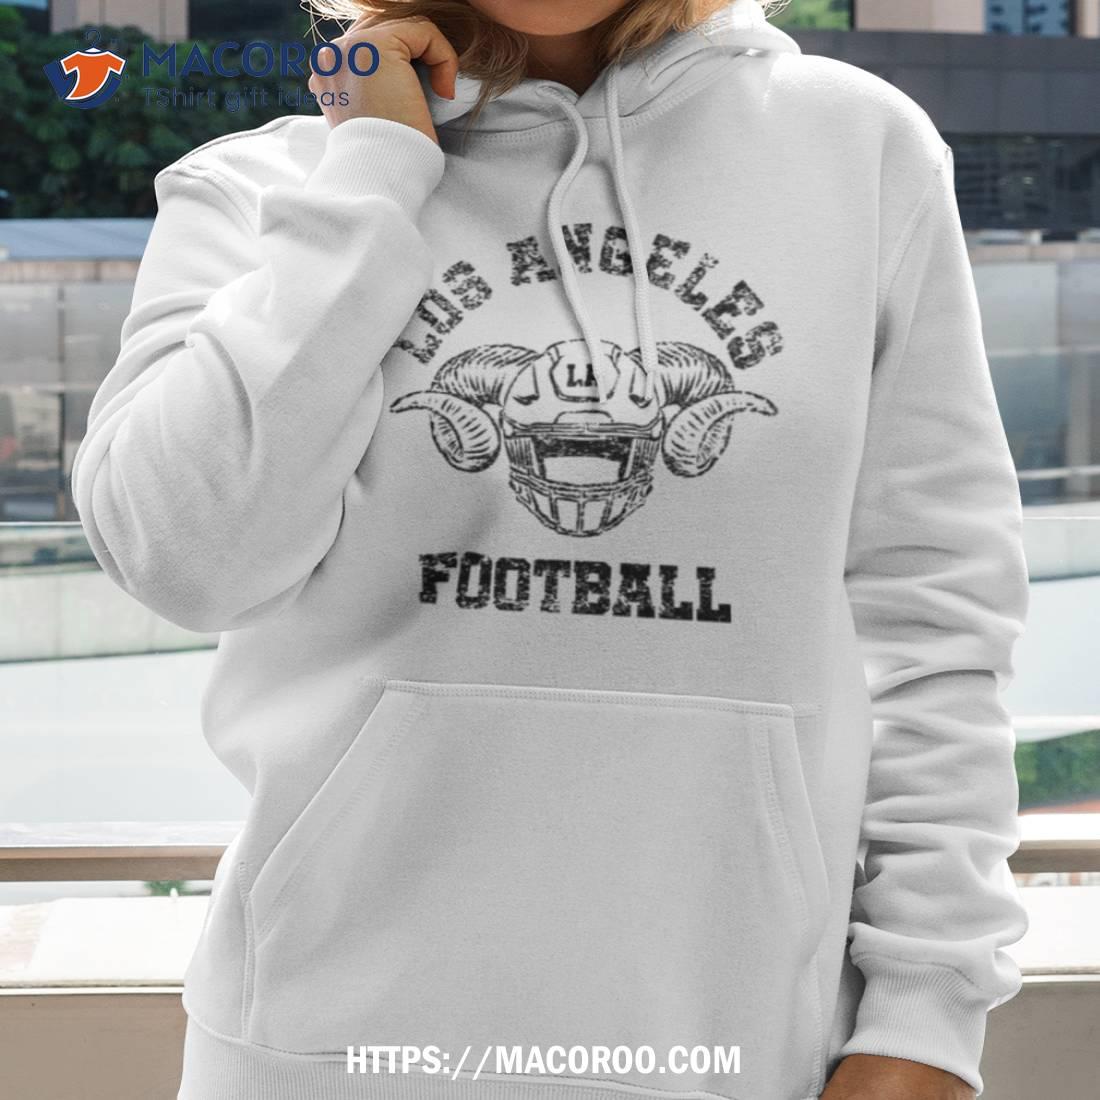 ByMegWithLove Los Angeles Football Shirt | Los Angeles Shirt | Los Angeles Football | Football Shirt | La Ram Football | Rams Shirt 